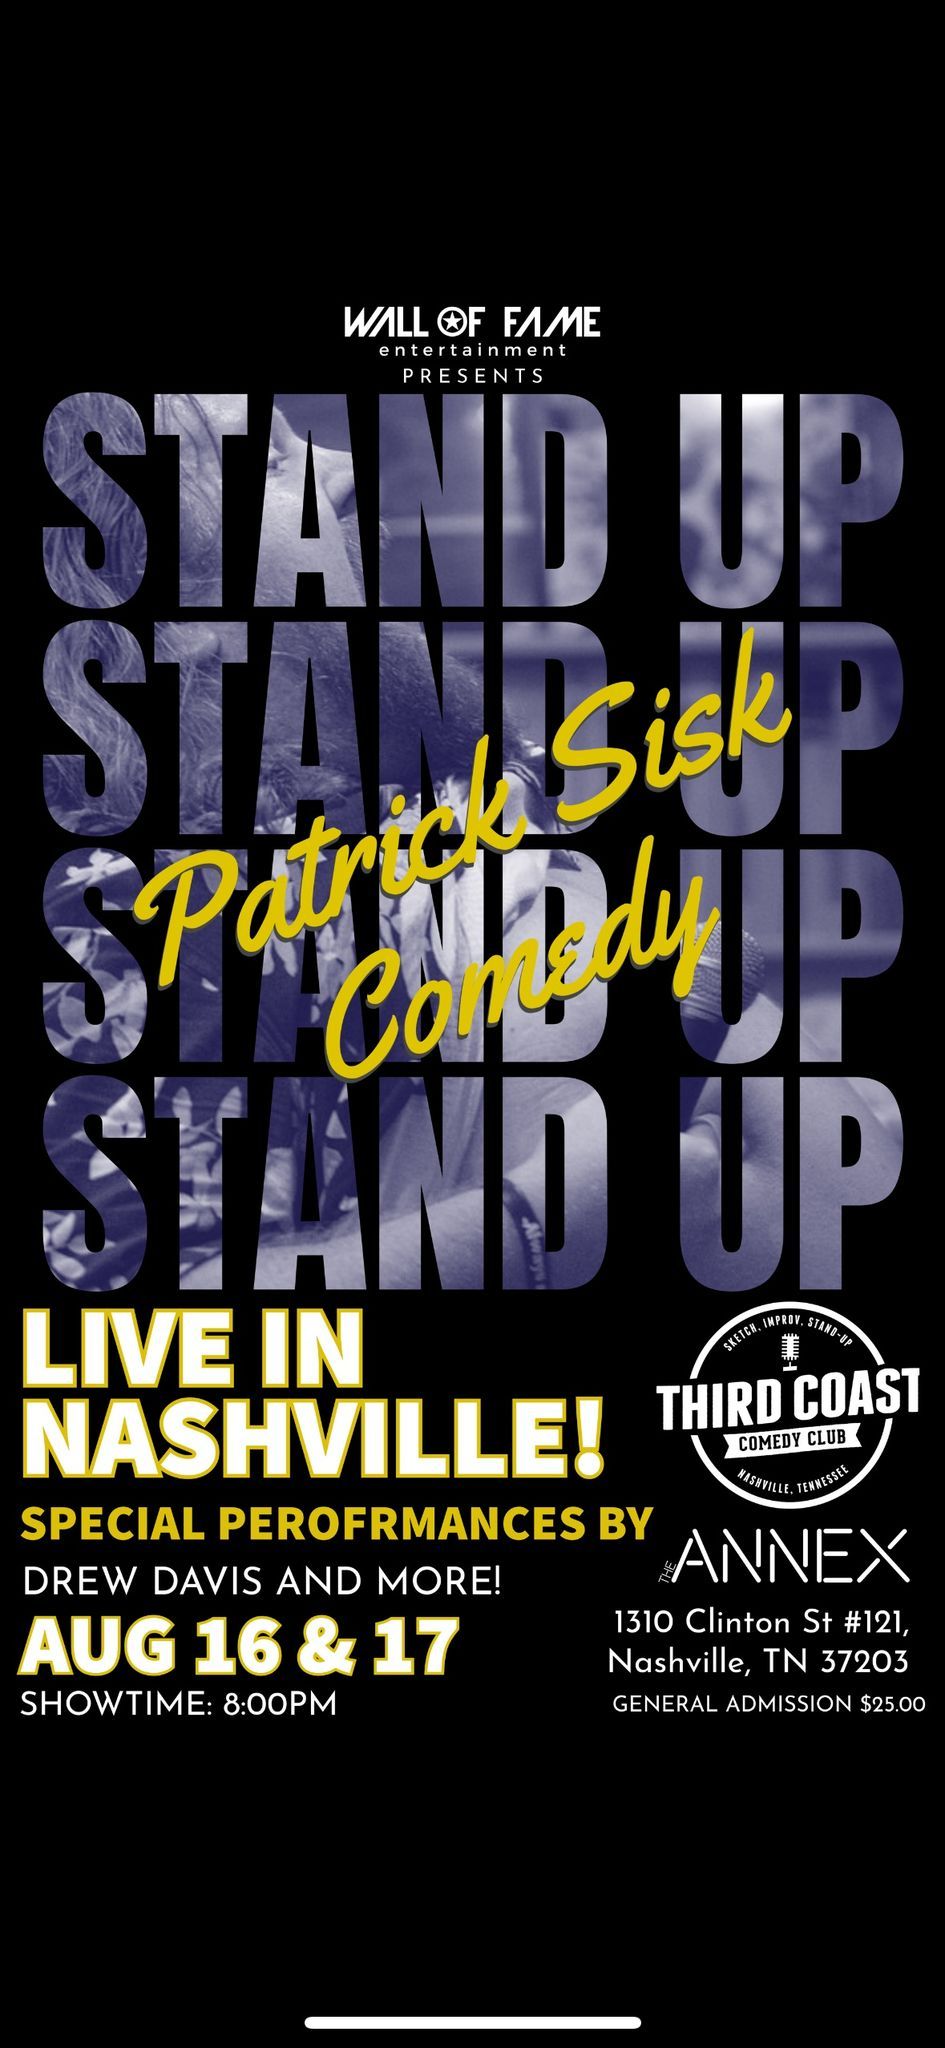 Patrick Sisk Live at Third Coast Comedy - Annex